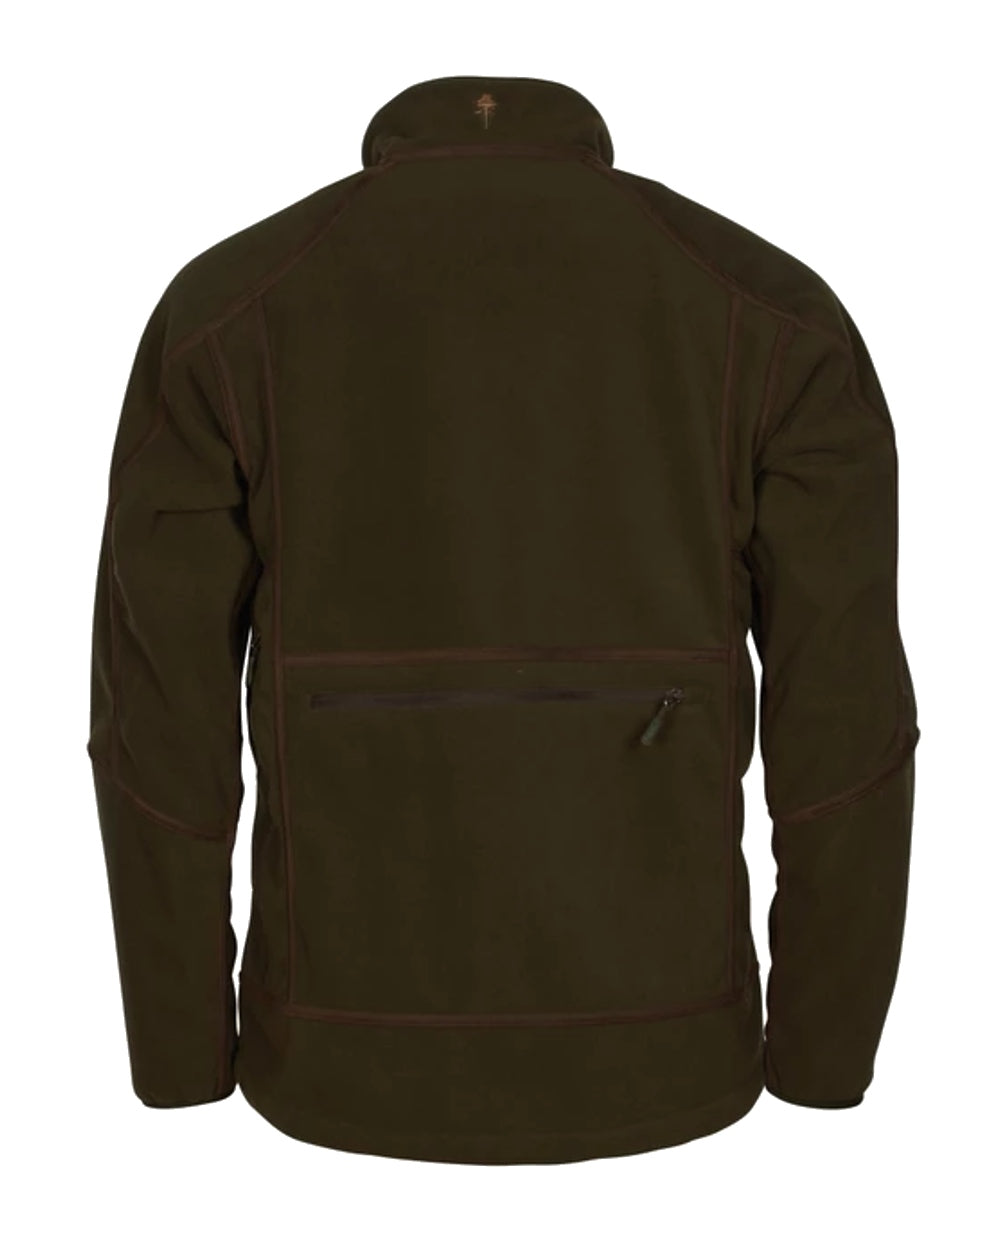 Pinewood Furudal Reversible Camou Fleece Jacket in Hunting Brown/Strata Blaze 